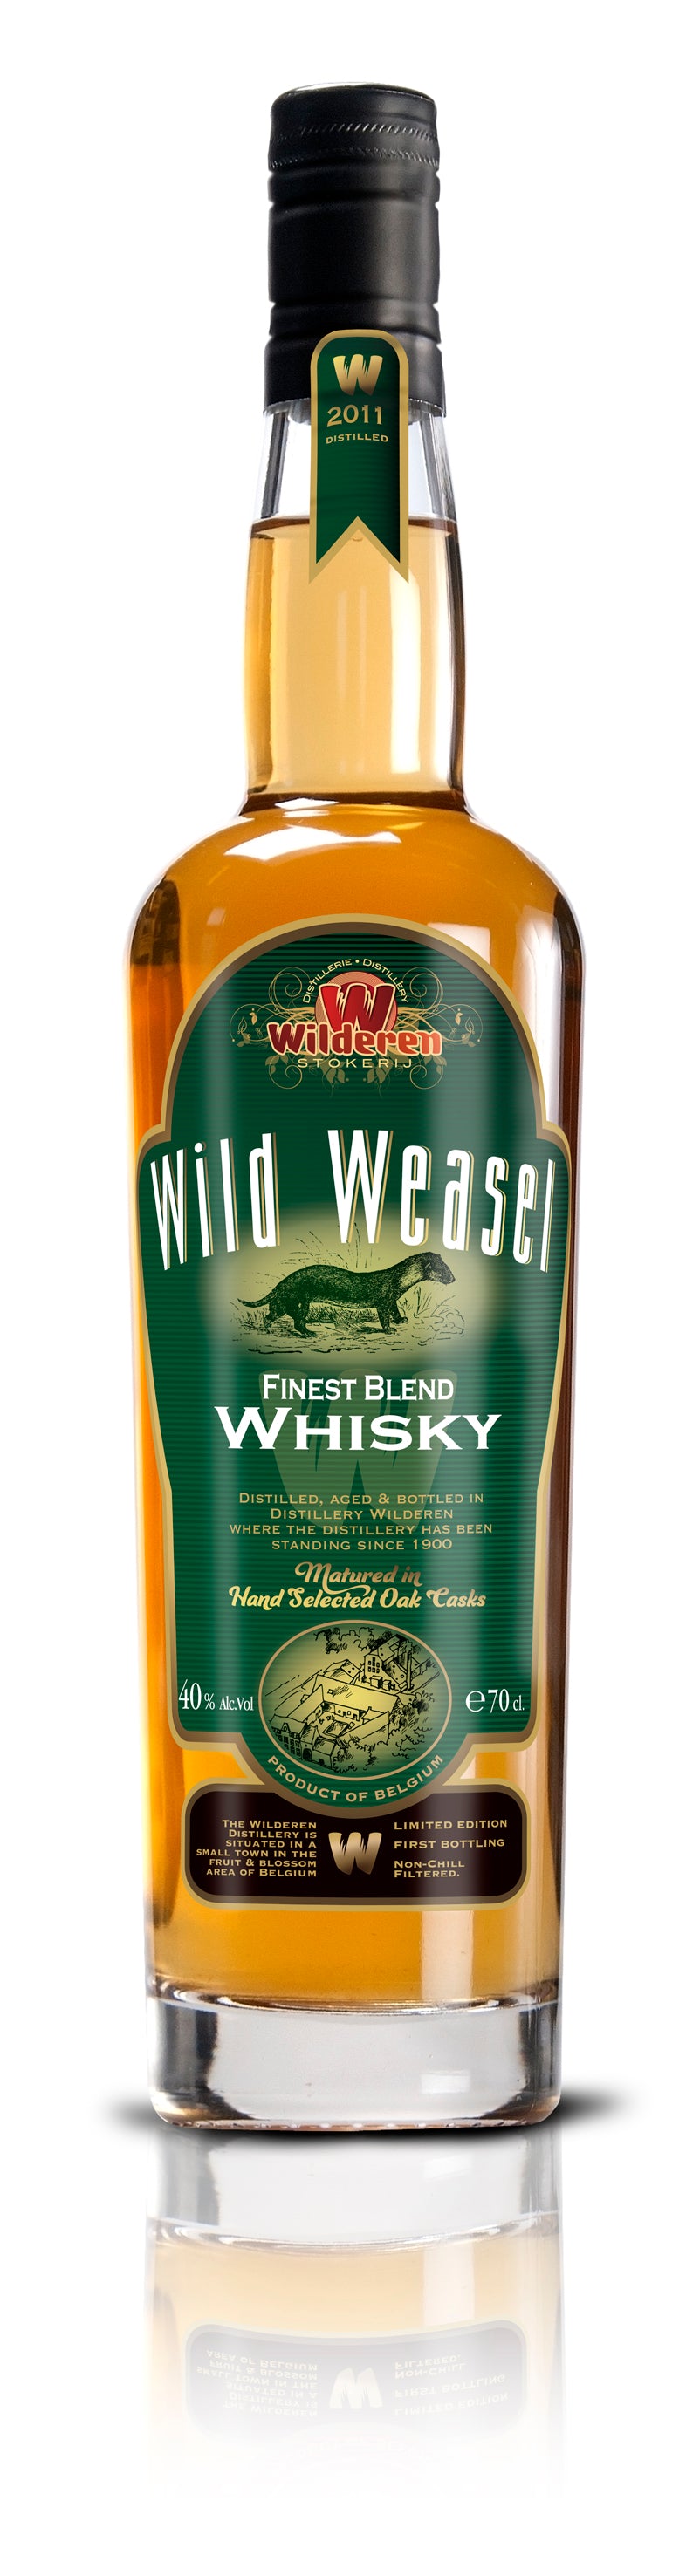 Wild Weasel Finest Blend Whisky 70cl